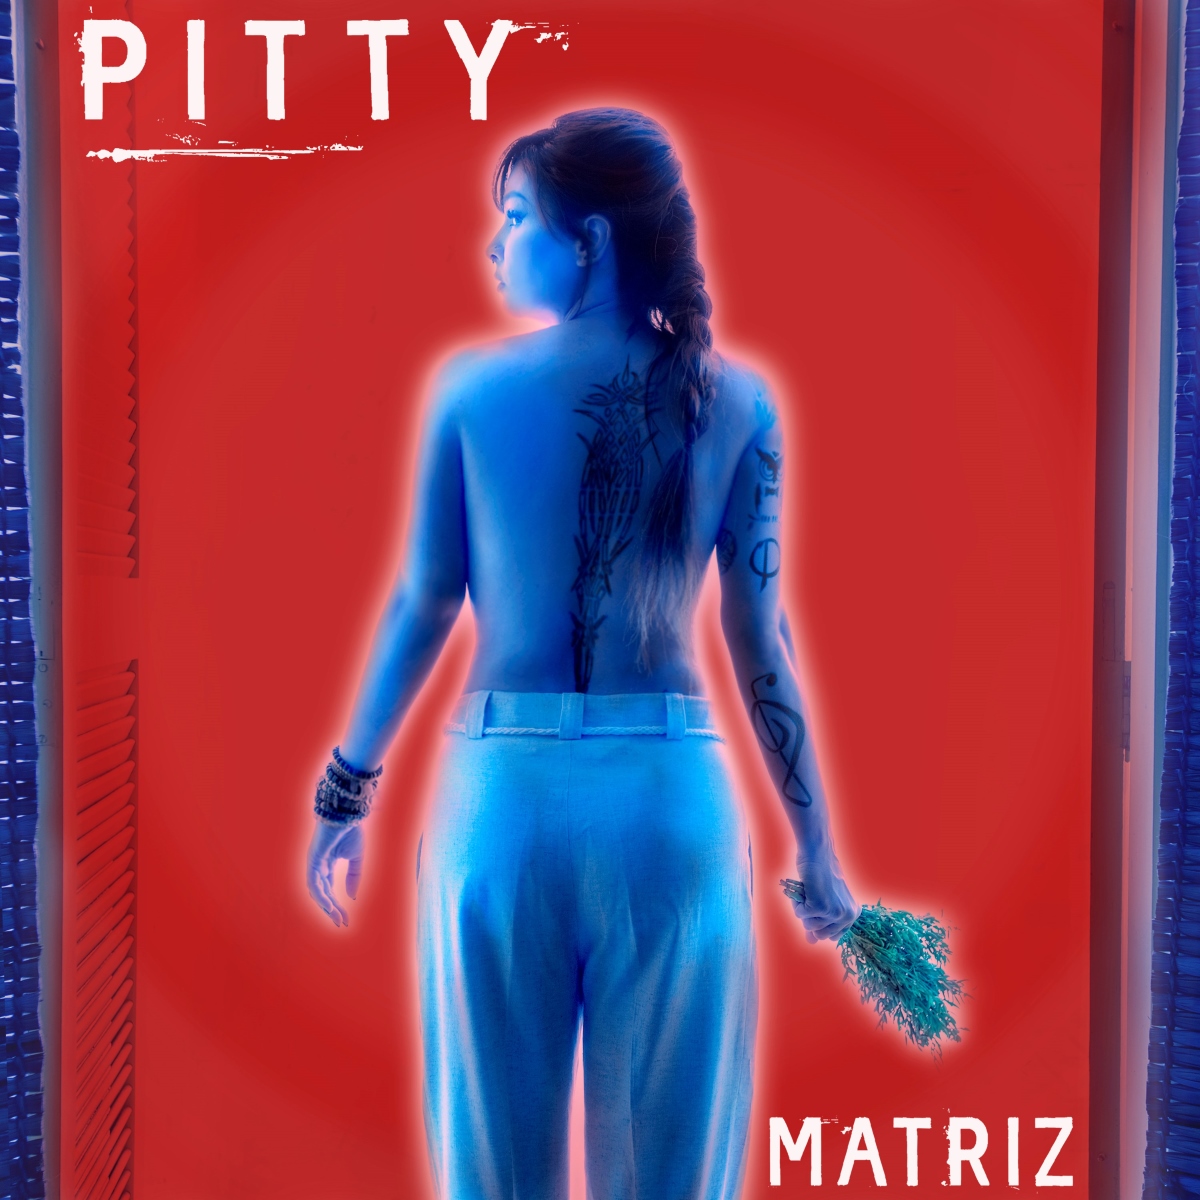 Pitty Matriz capa web